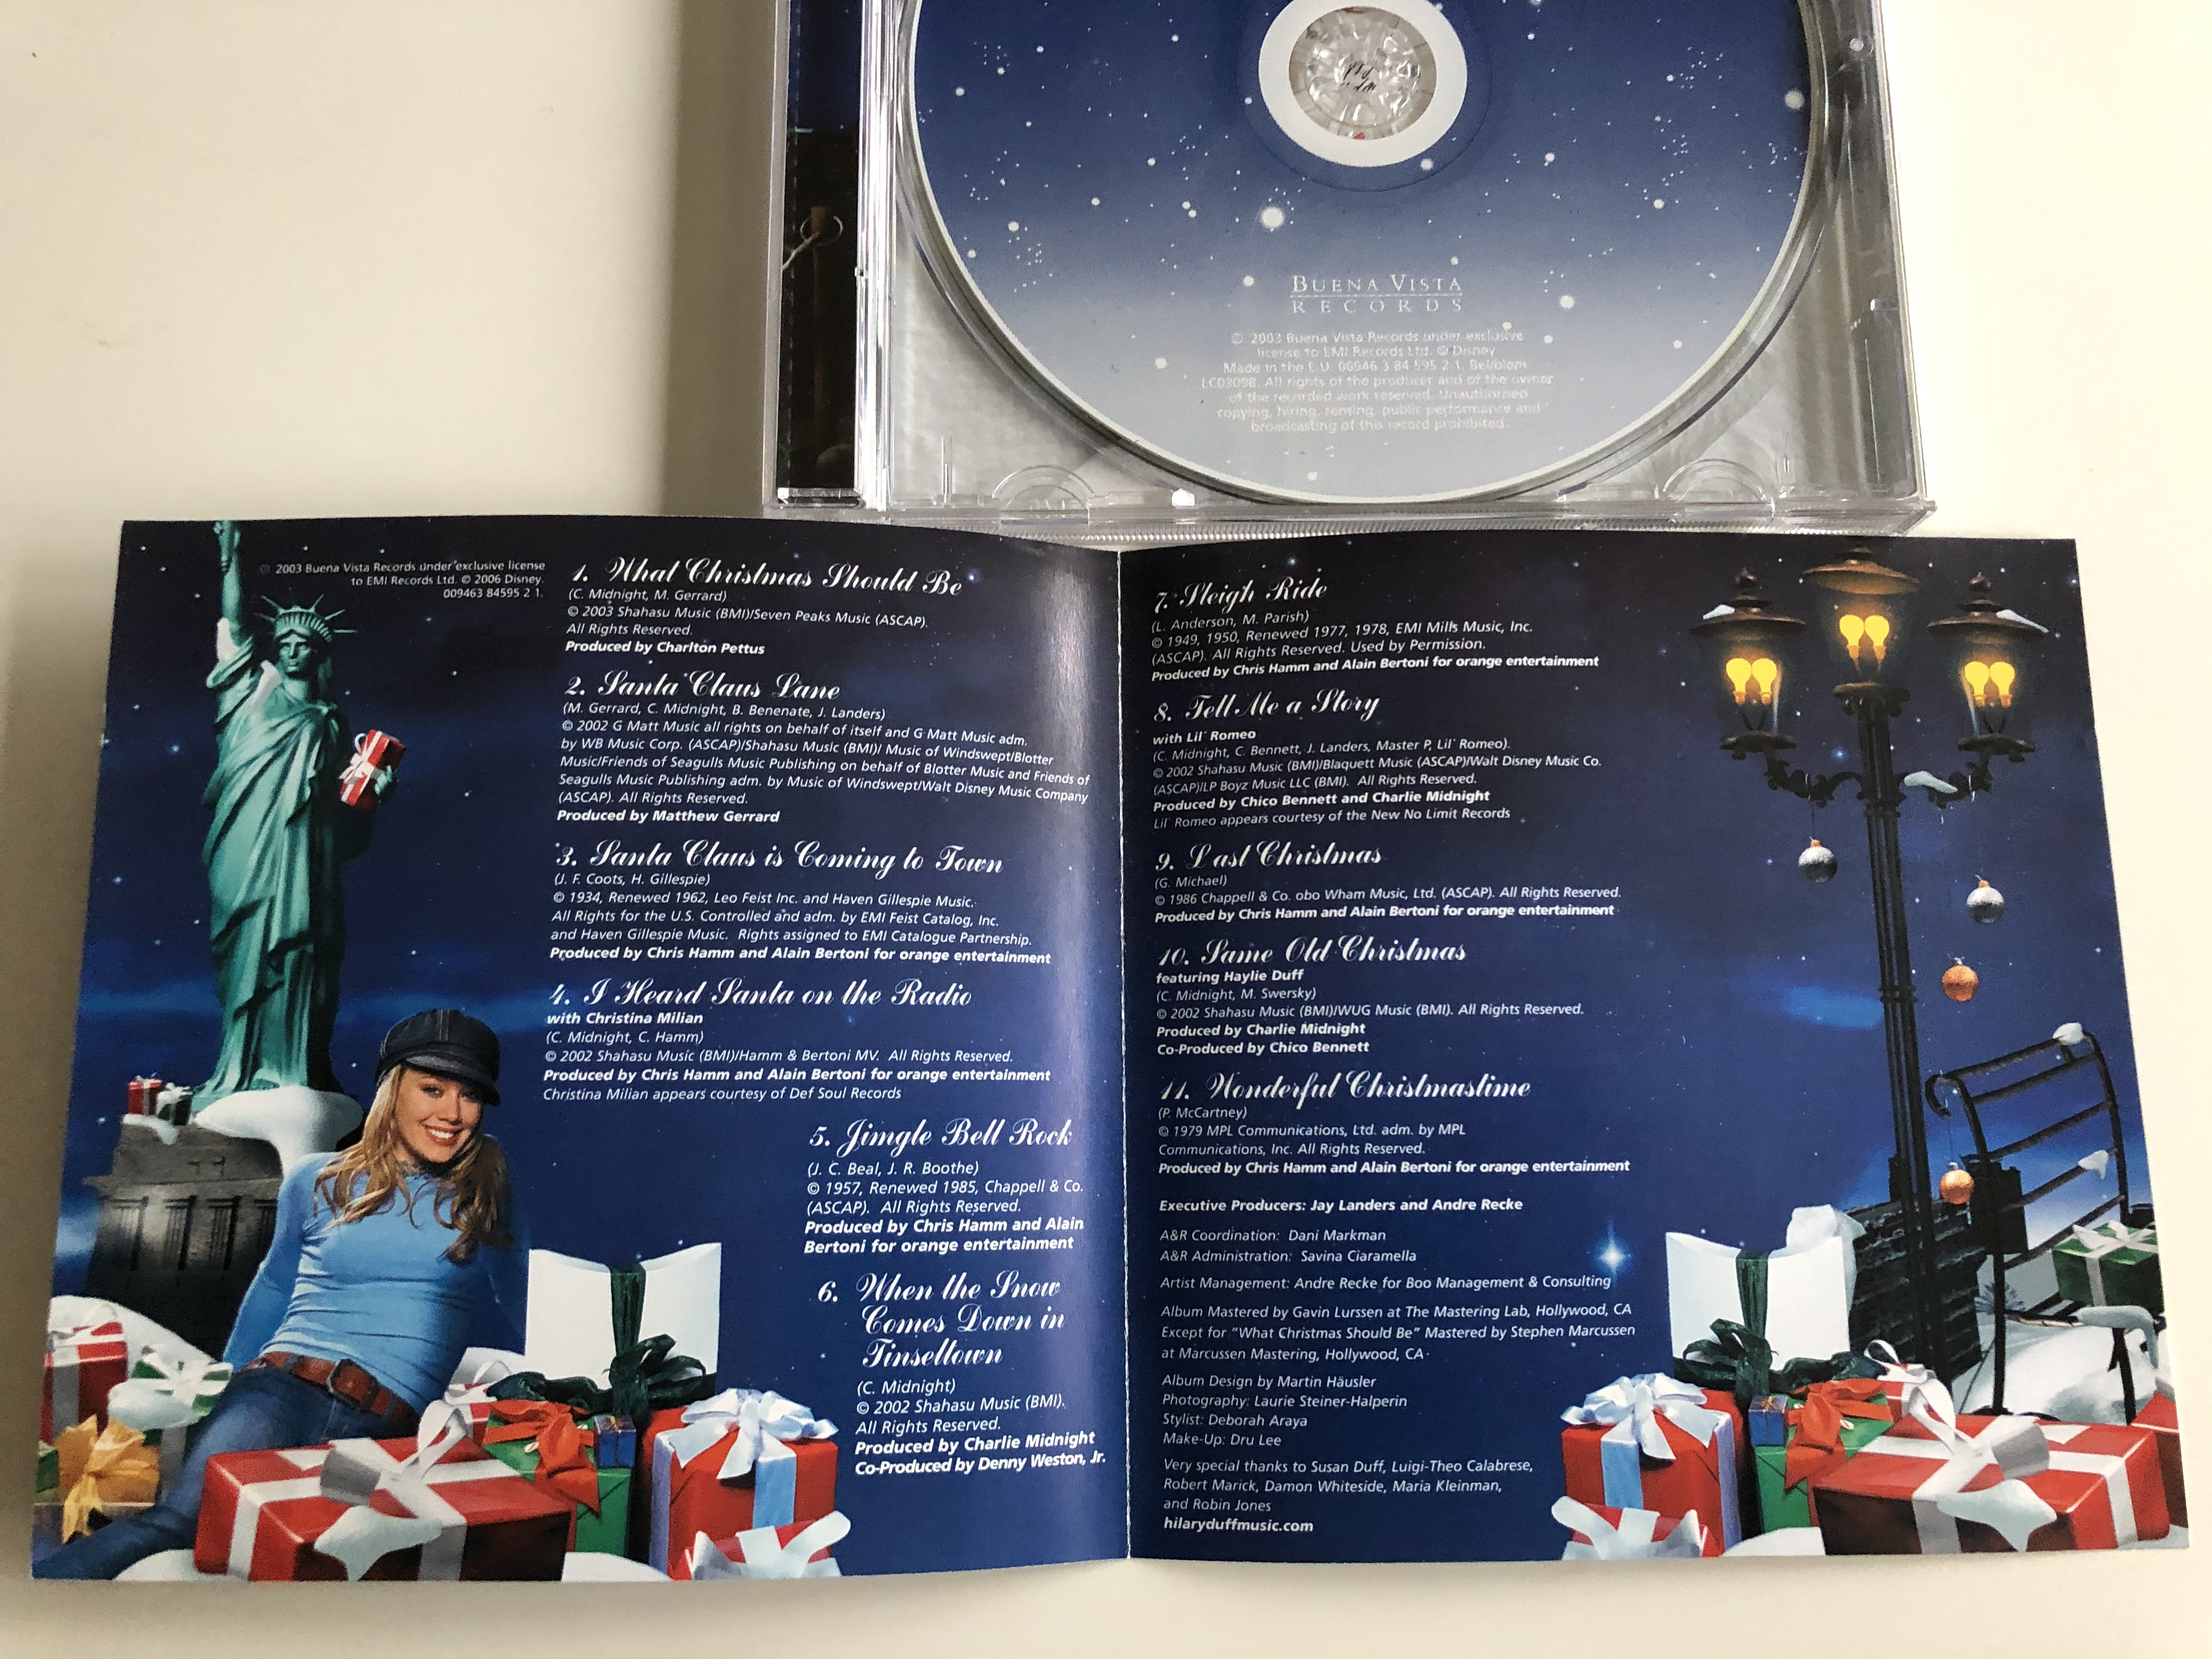 hilary-duff-santa-claus-lane-buena-vista-records-audio-cd-2003-094638459521-2-.jpg